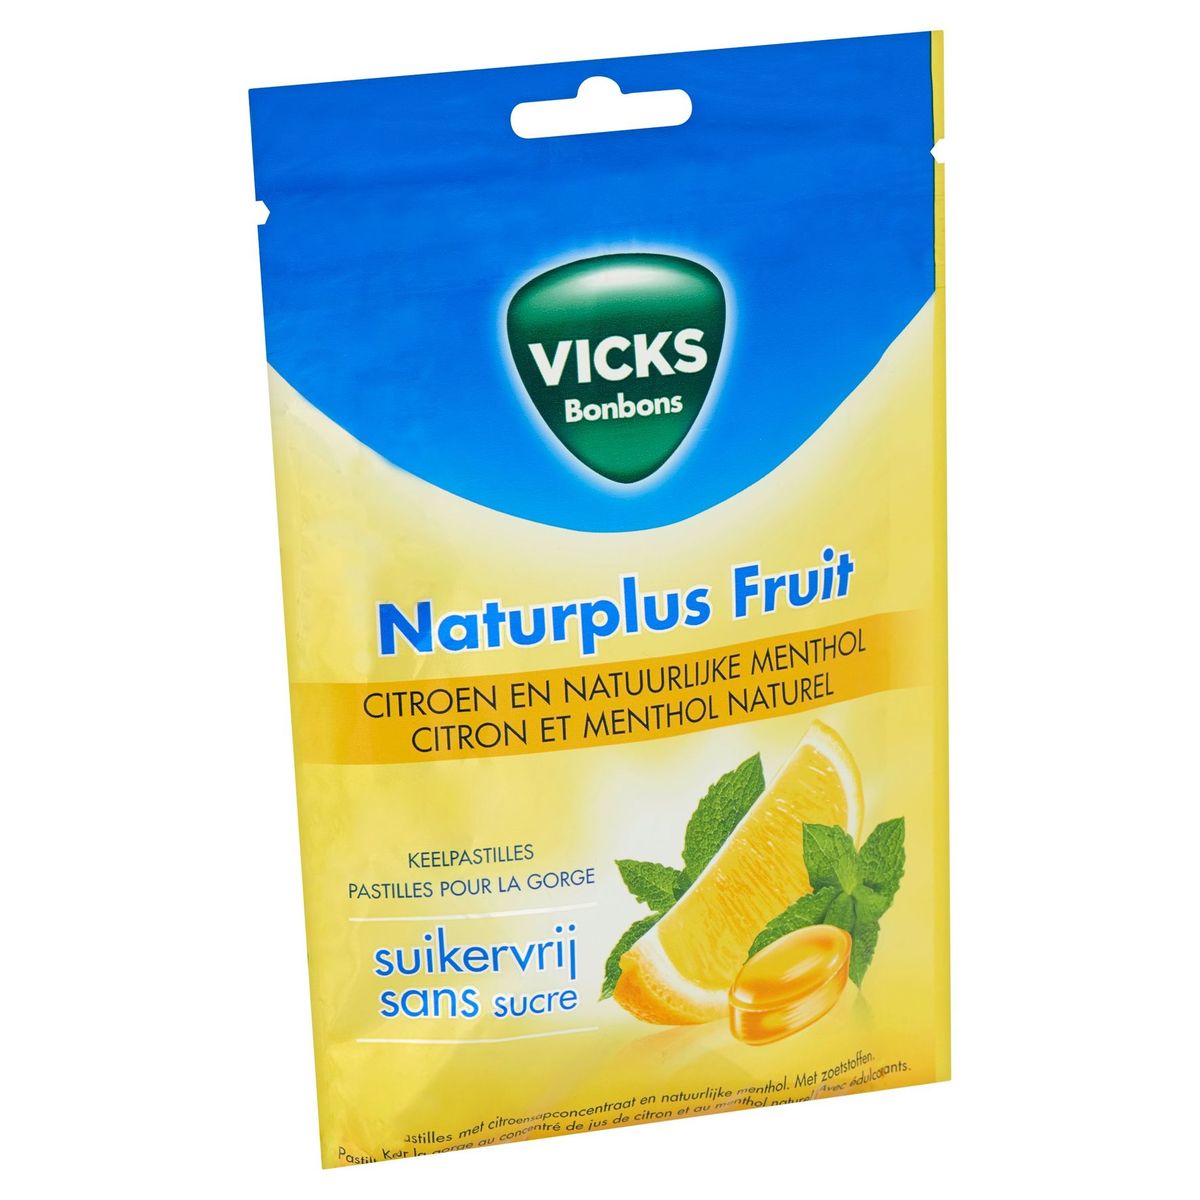 Vicks Bonbons Naturplus Fruit Citroen en Natuurlijke Menthol 72 g